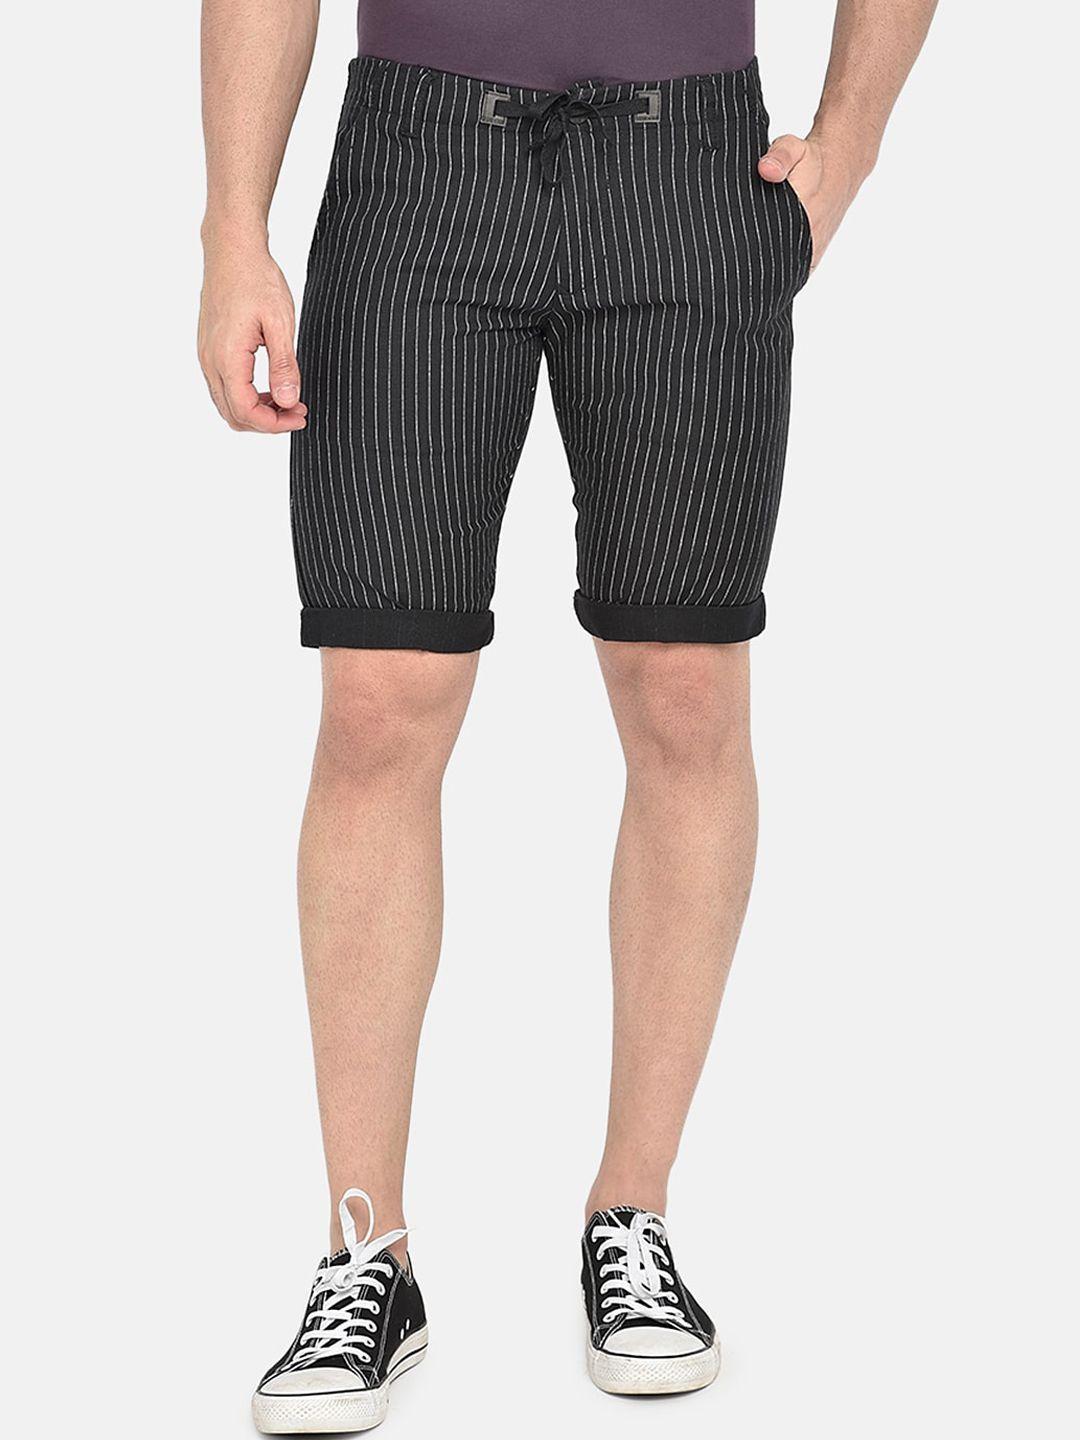 beevee men black & white striped slim fit regular shorts